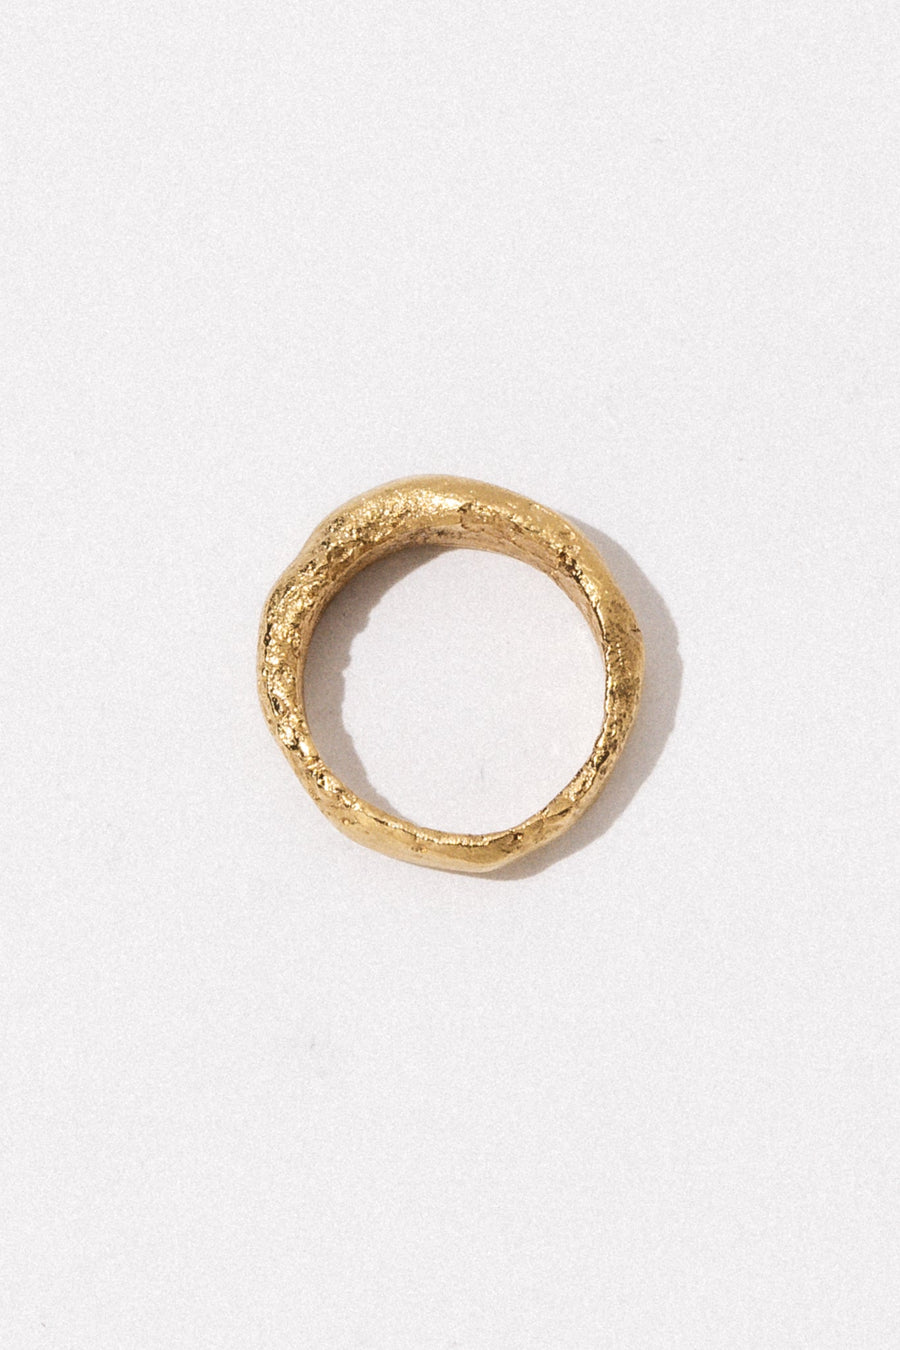 JUNO Jewelry Luna Ring